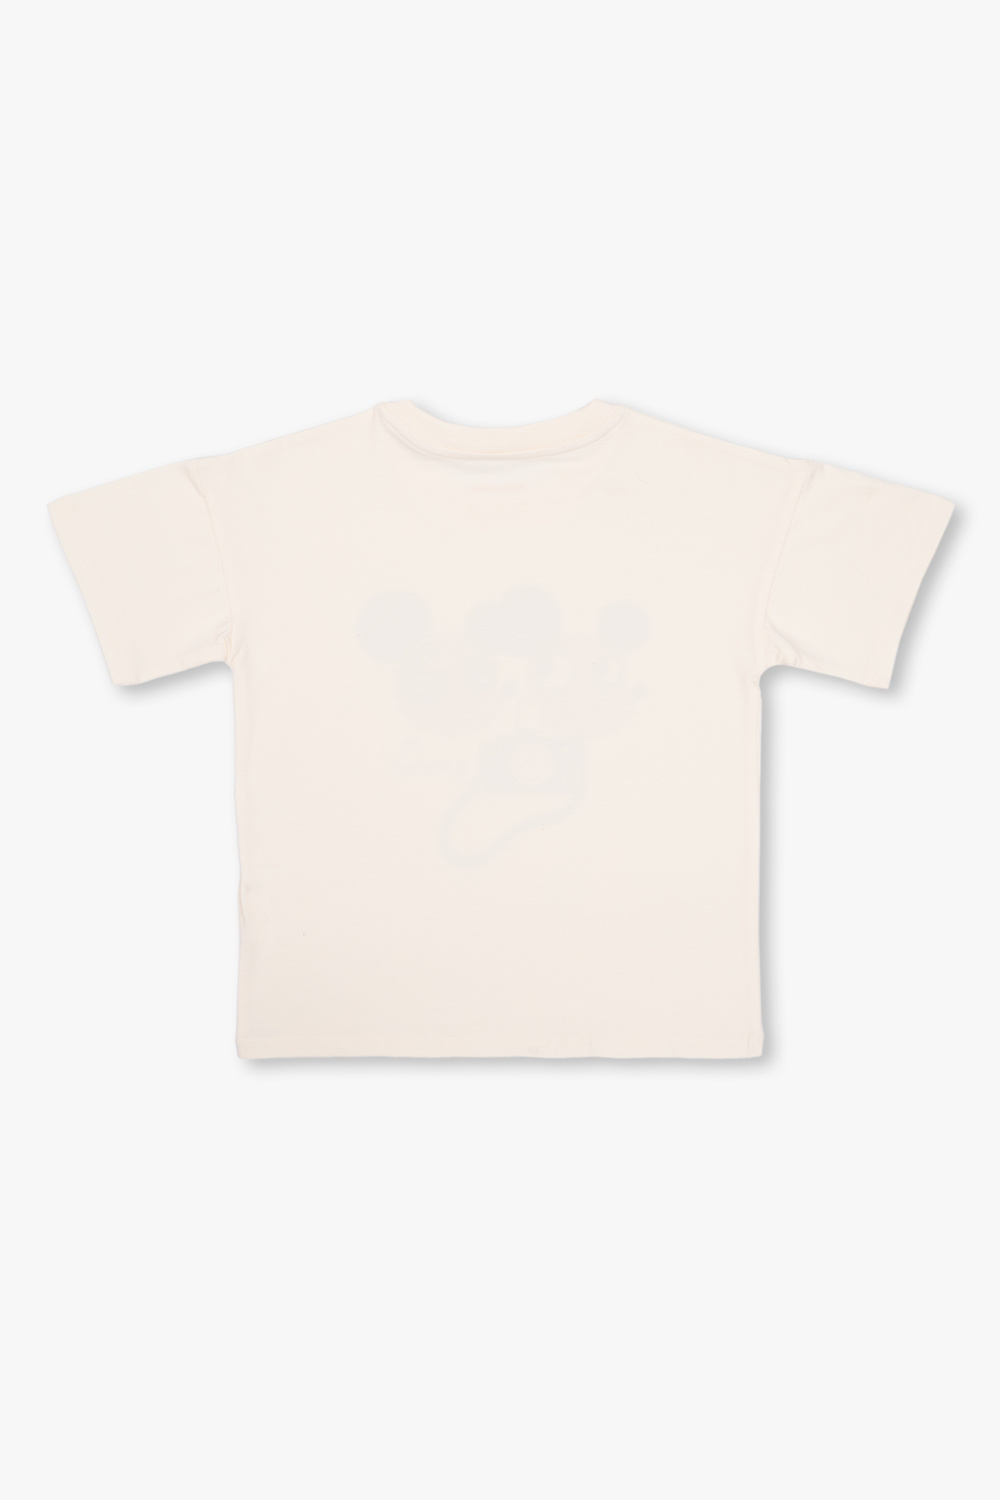 Mini Rodini ‘Ritzratz’ printed T-shirt